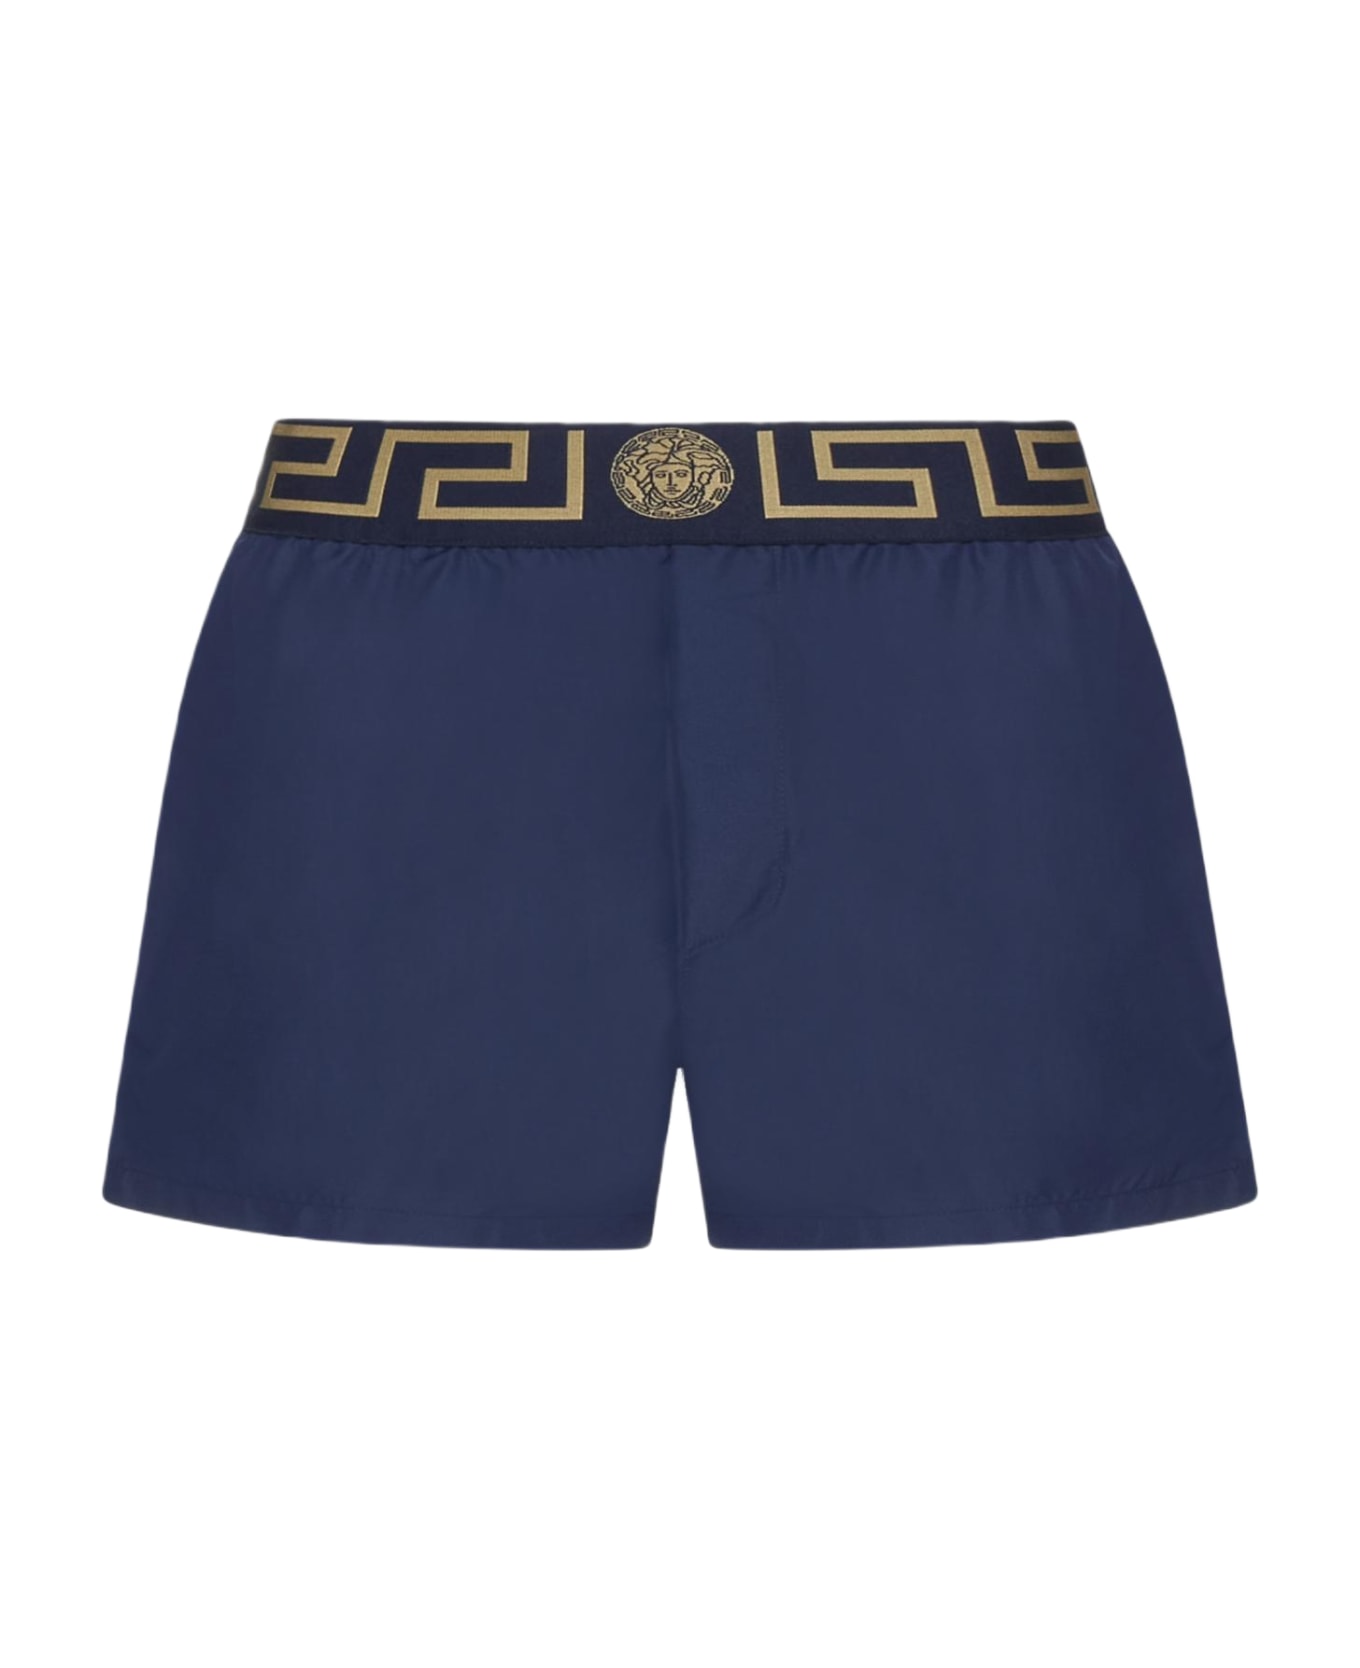 Versace Greca And Medusa Swim Shorts - Blu oro